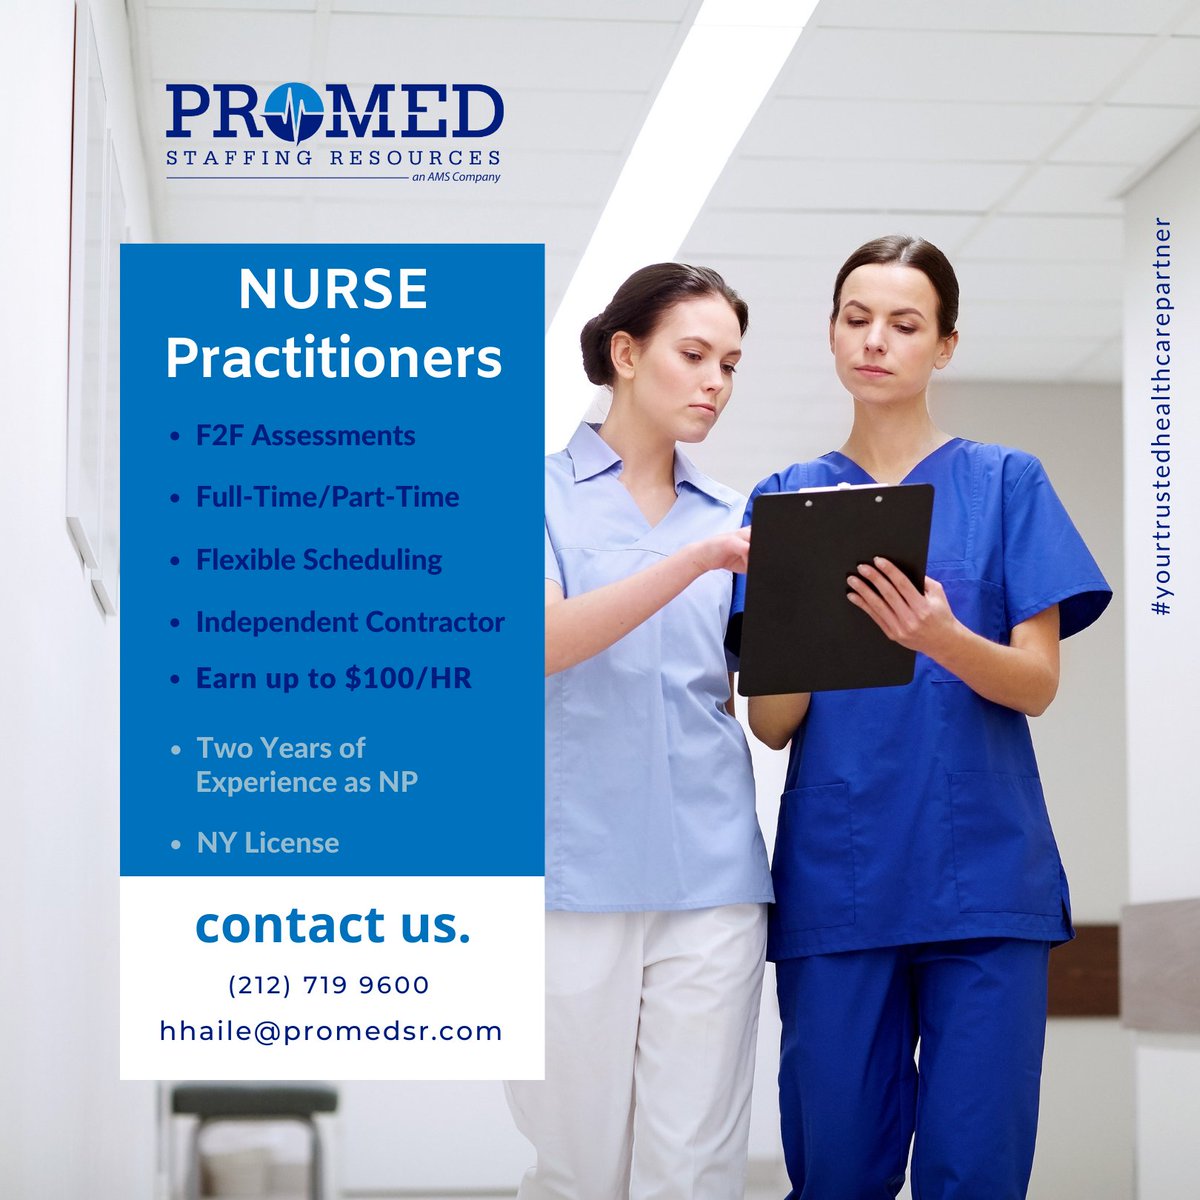 Promed Staffing Resources has the perfect job for you! Email Hemeden Haile at hhaile@promedsr.com

#nursepractitioner #maximus #promedsr #nursepractitionerjobs #nursepractitionersinyc #newyorknursepractitioners #practitionerorder #newyorkjobs #hiringinewyork